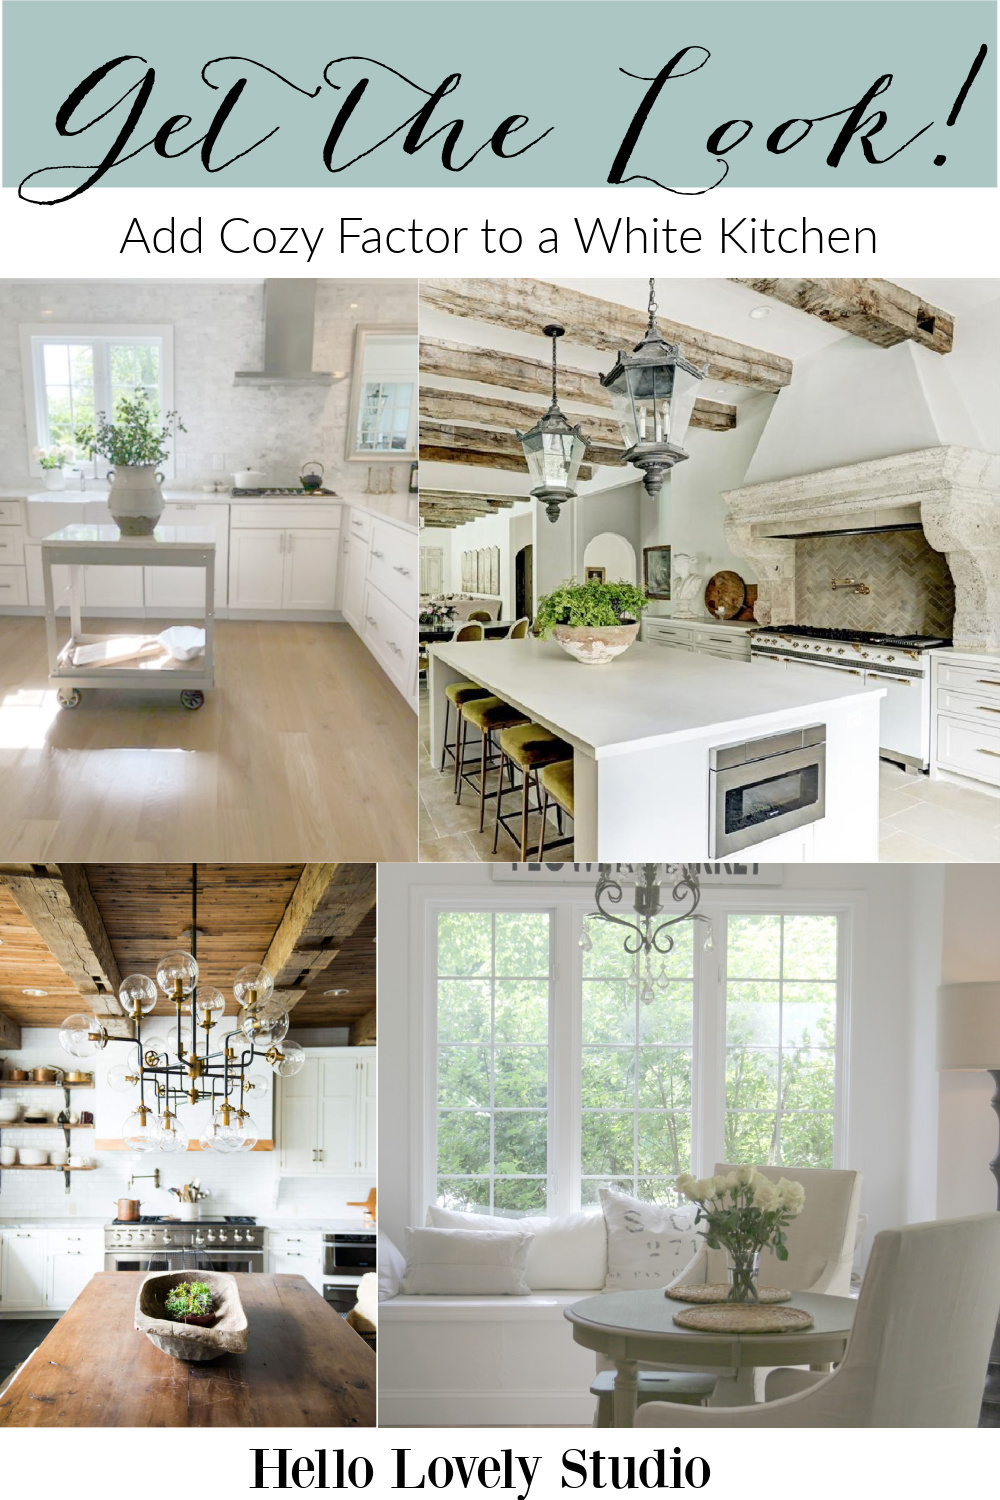 Get the look - add cozy factor to a white kitchen. #hellolovelystudio #whitekitchens #kitchendesign #designinspiration #kitchendecor #kitchendecoratingideas